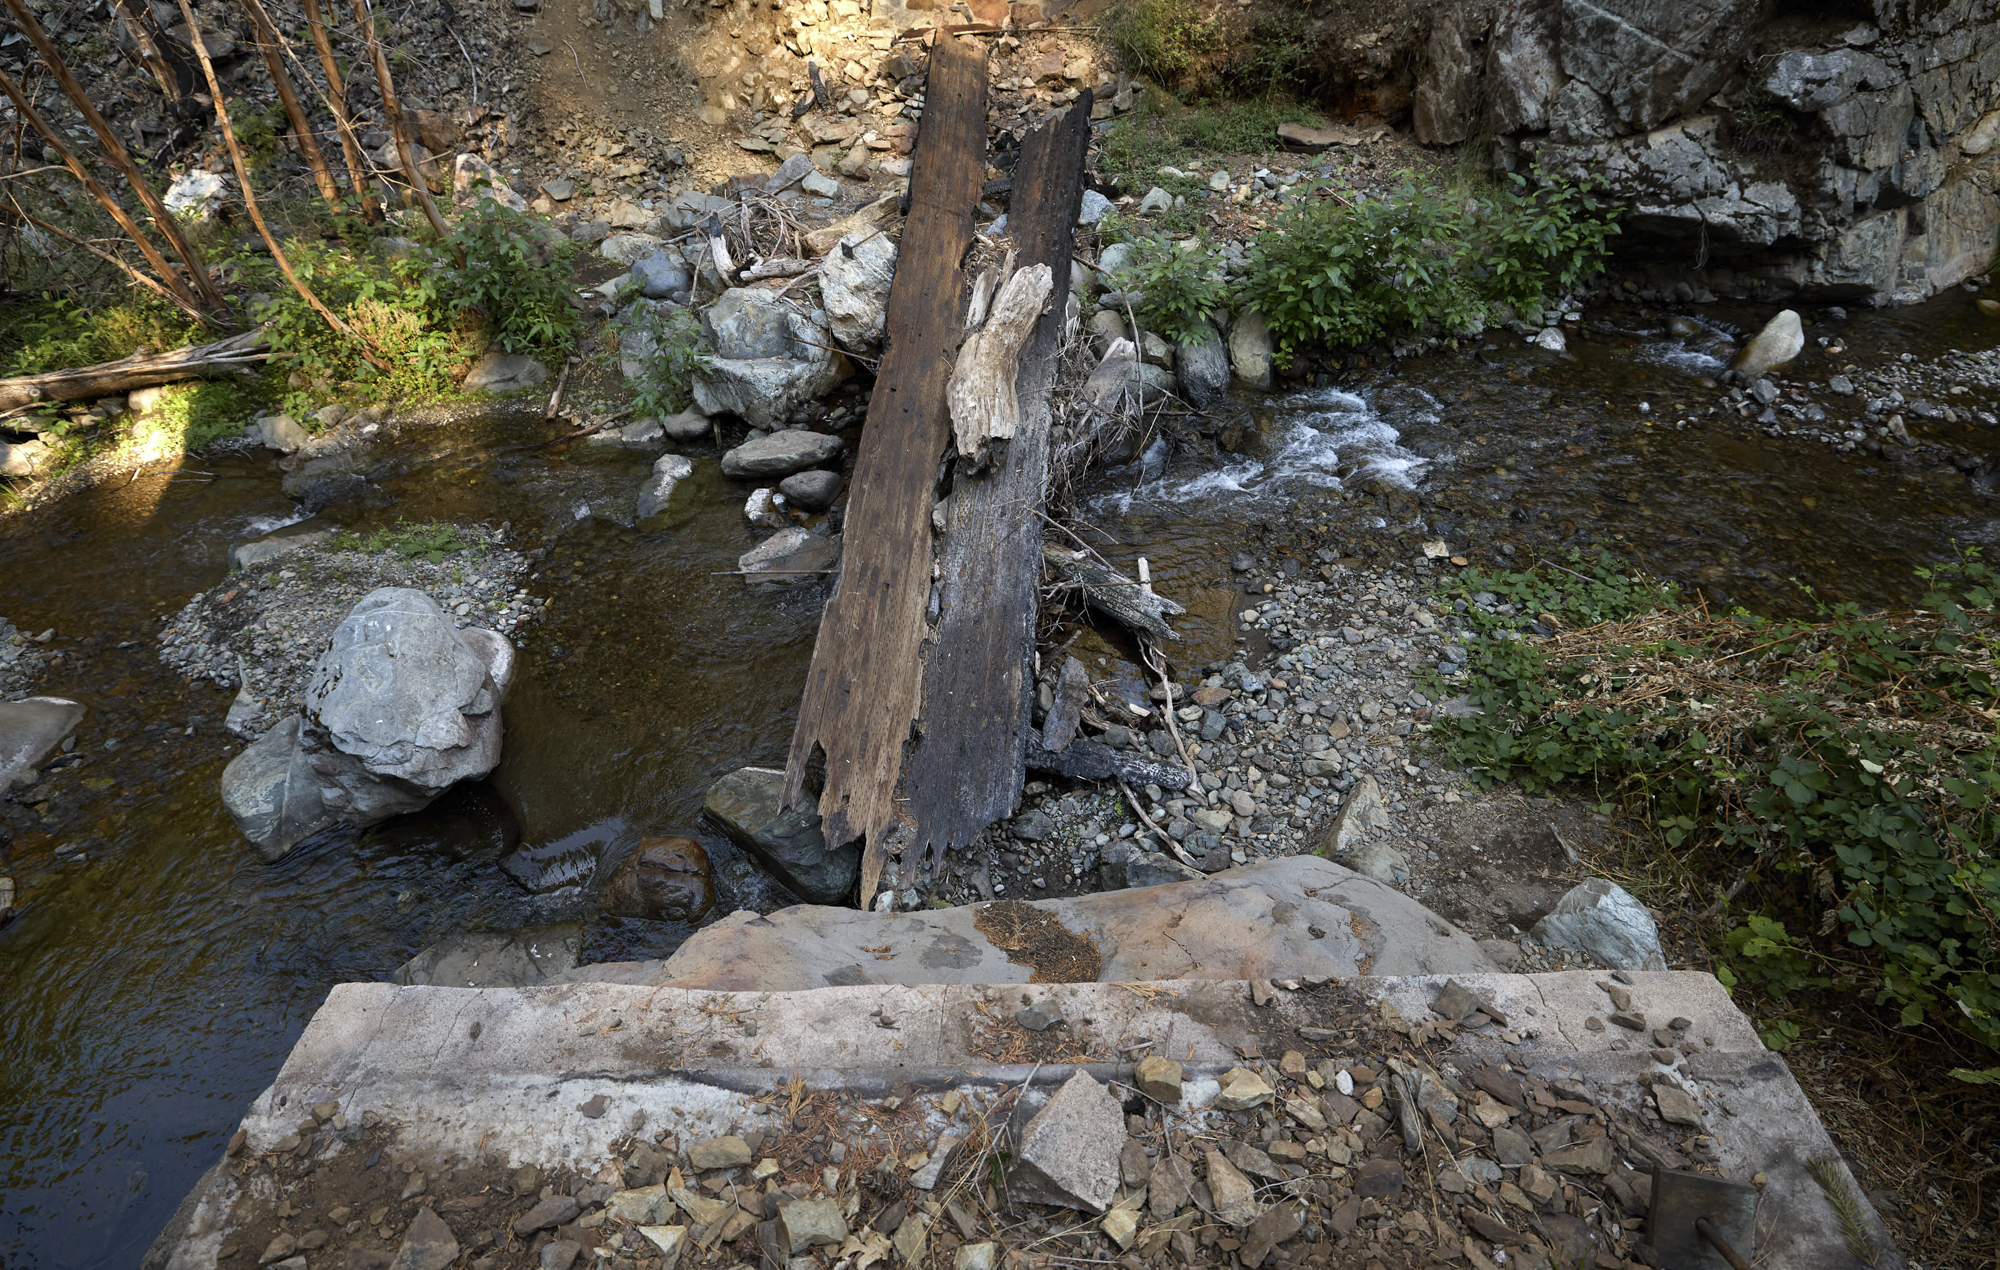 a burned log across a small river